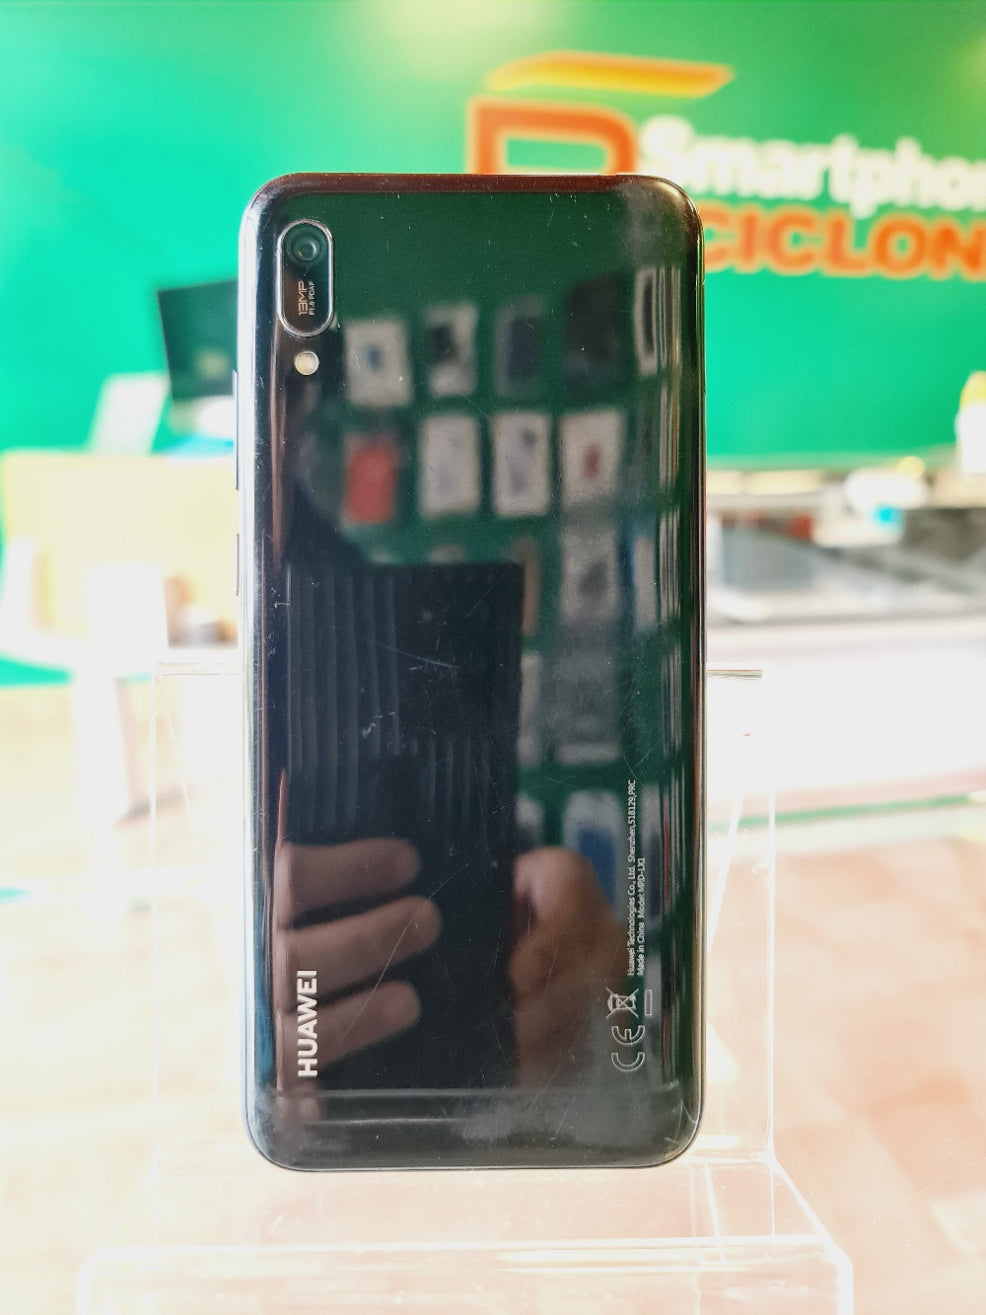 Huawei Y6 2019 - 32gb - DS - nero